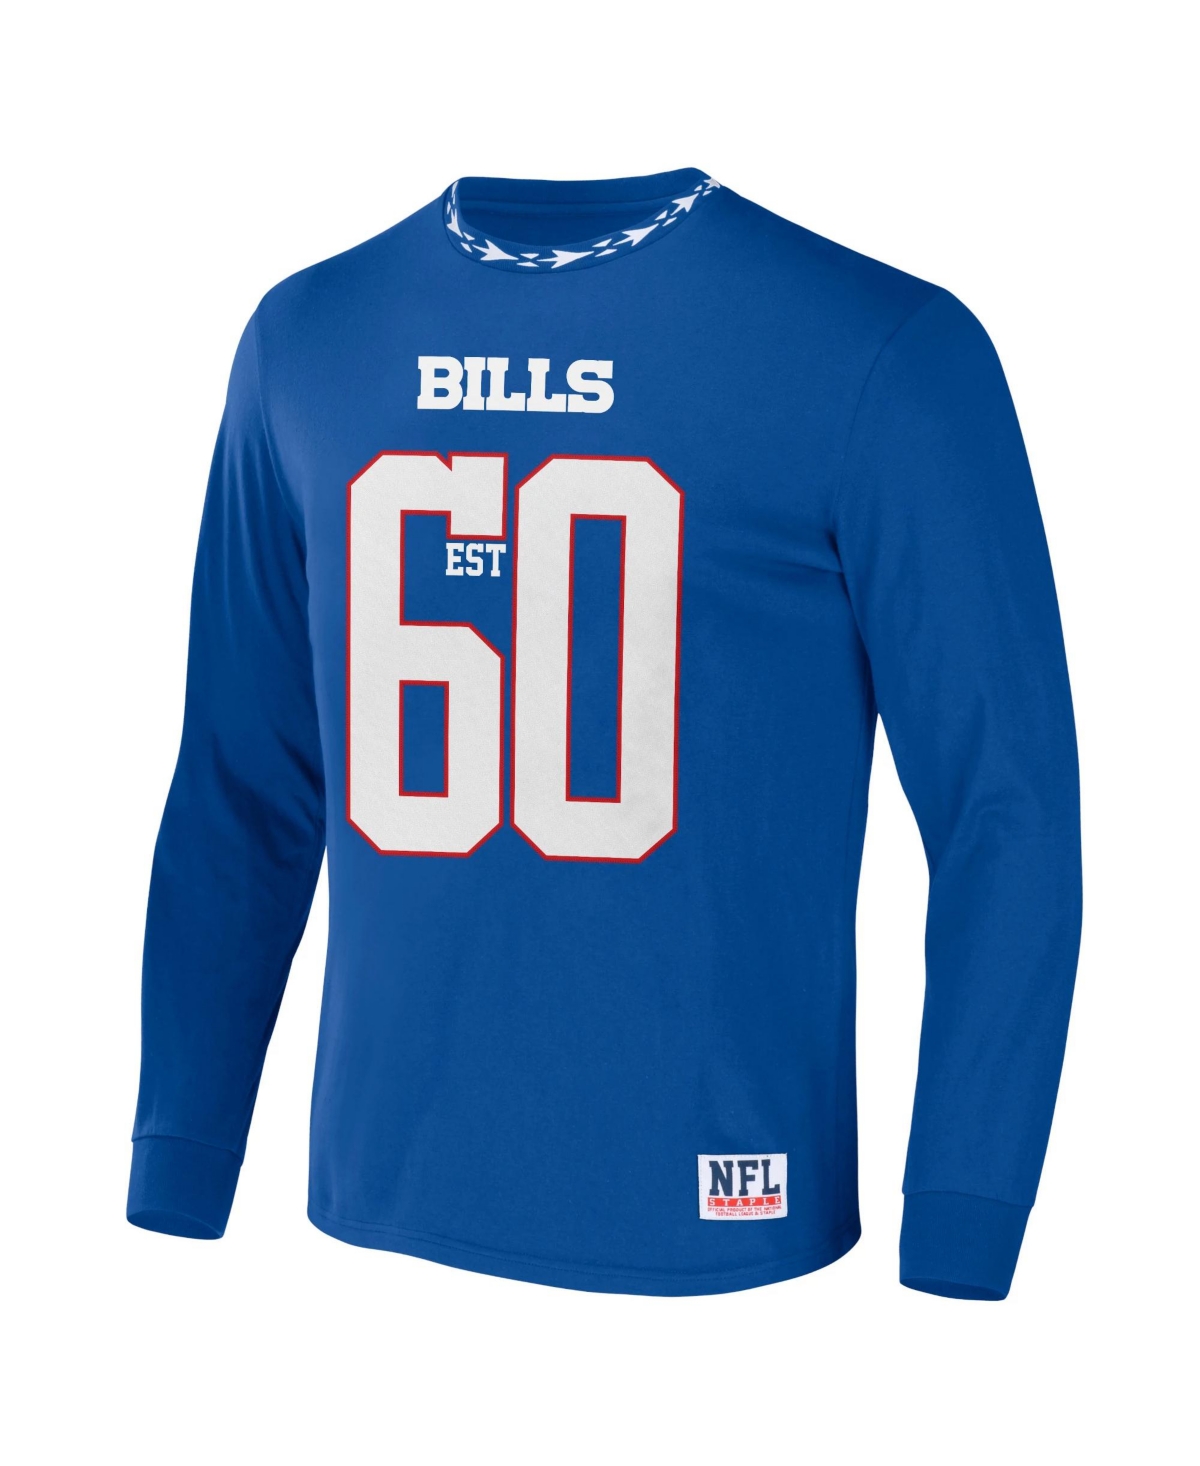 Shop Nfl Properties Men's Nfl X Staple Royal Buffalo Bills Core Long Sleeve Jersey Style T-shirt